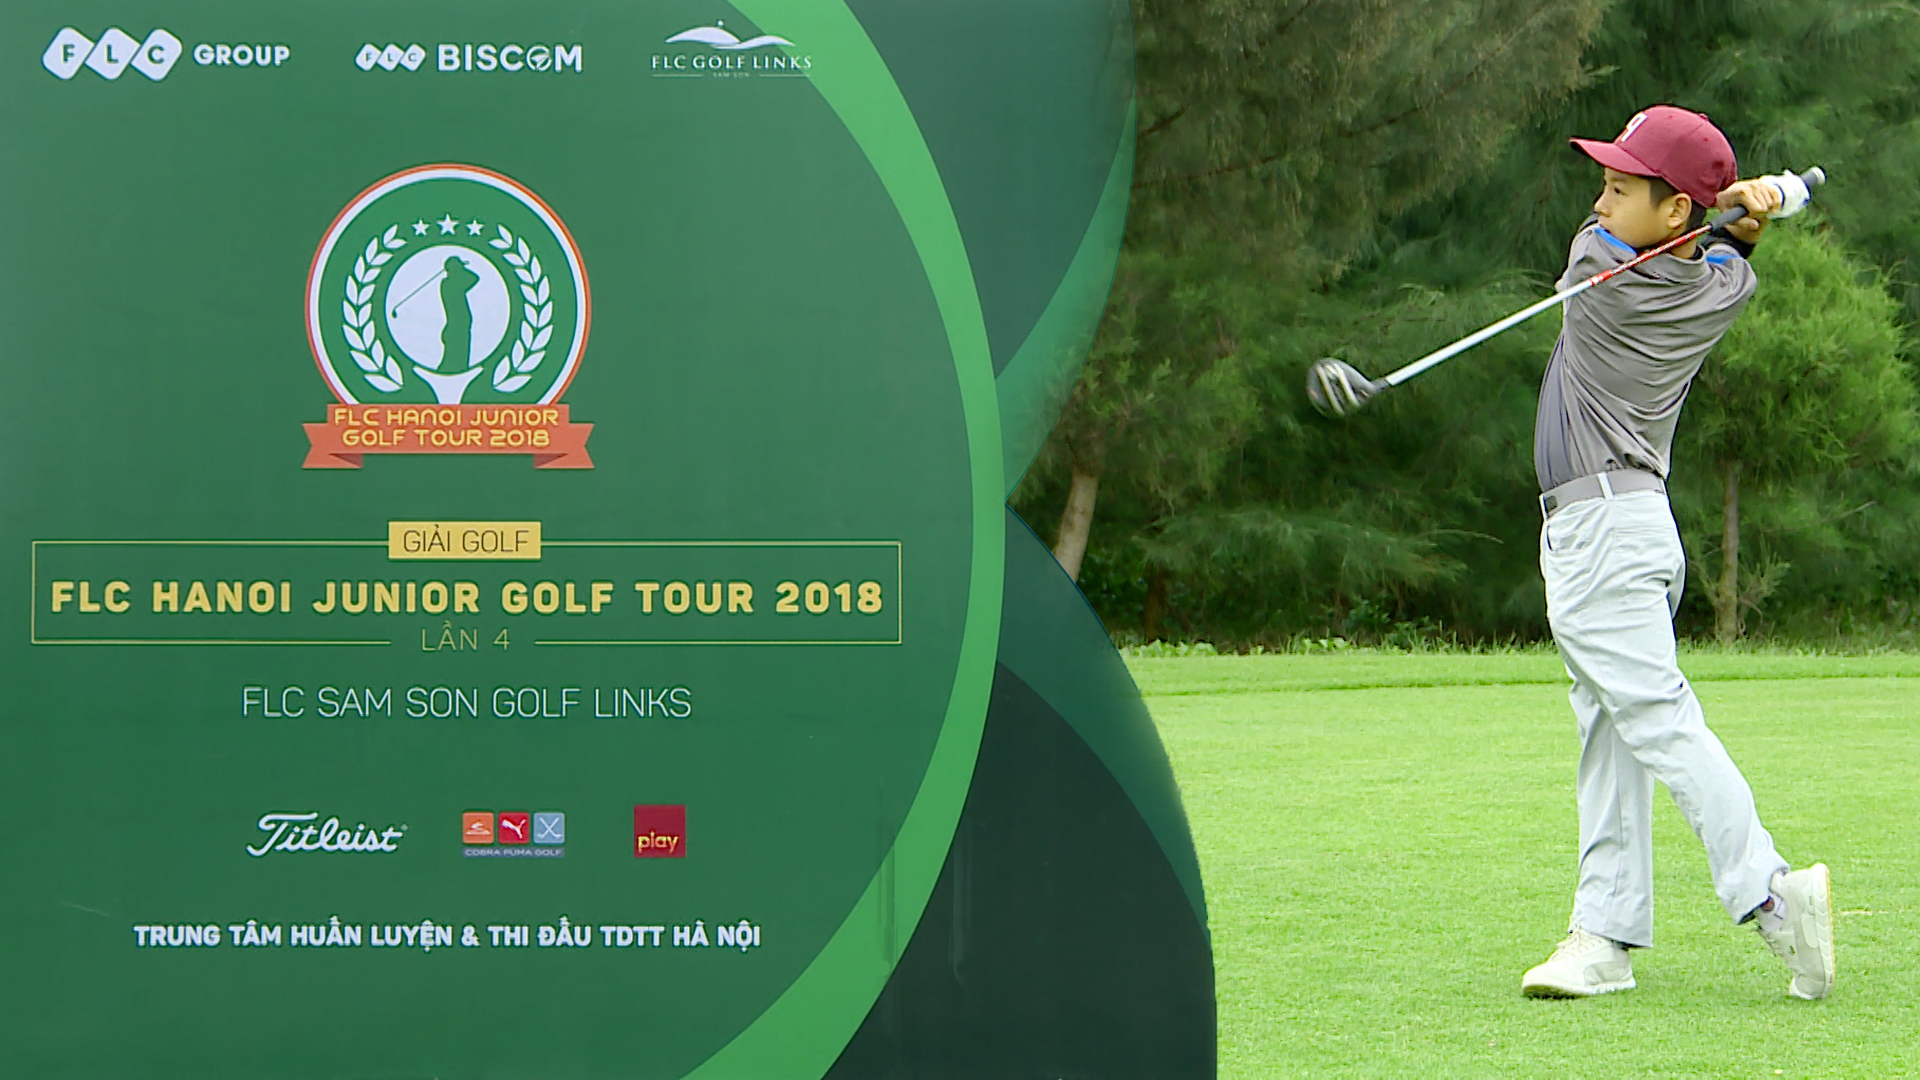 Toàn cảnh giải FLC Hanoi Junior Golf Tour 2018 - Lần 4